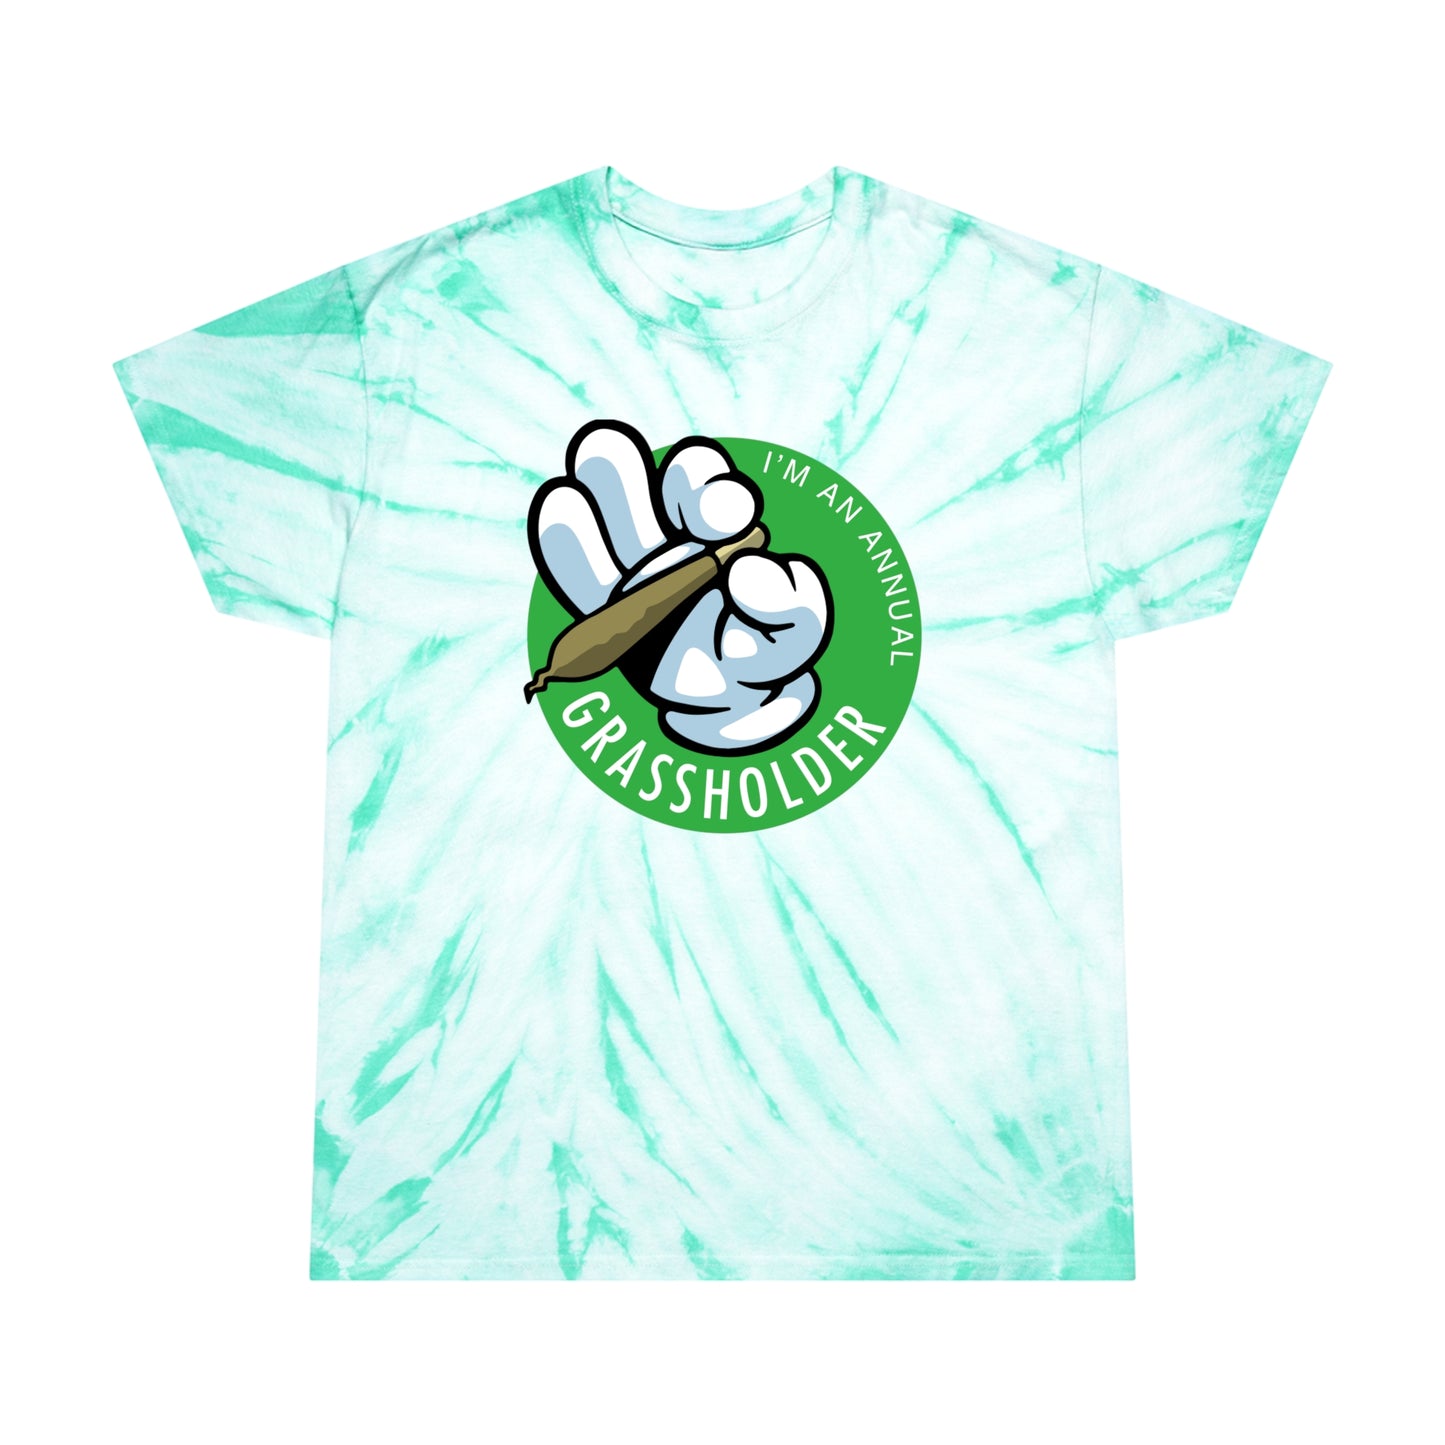 Annual Grassholder tie-dye t-shirt